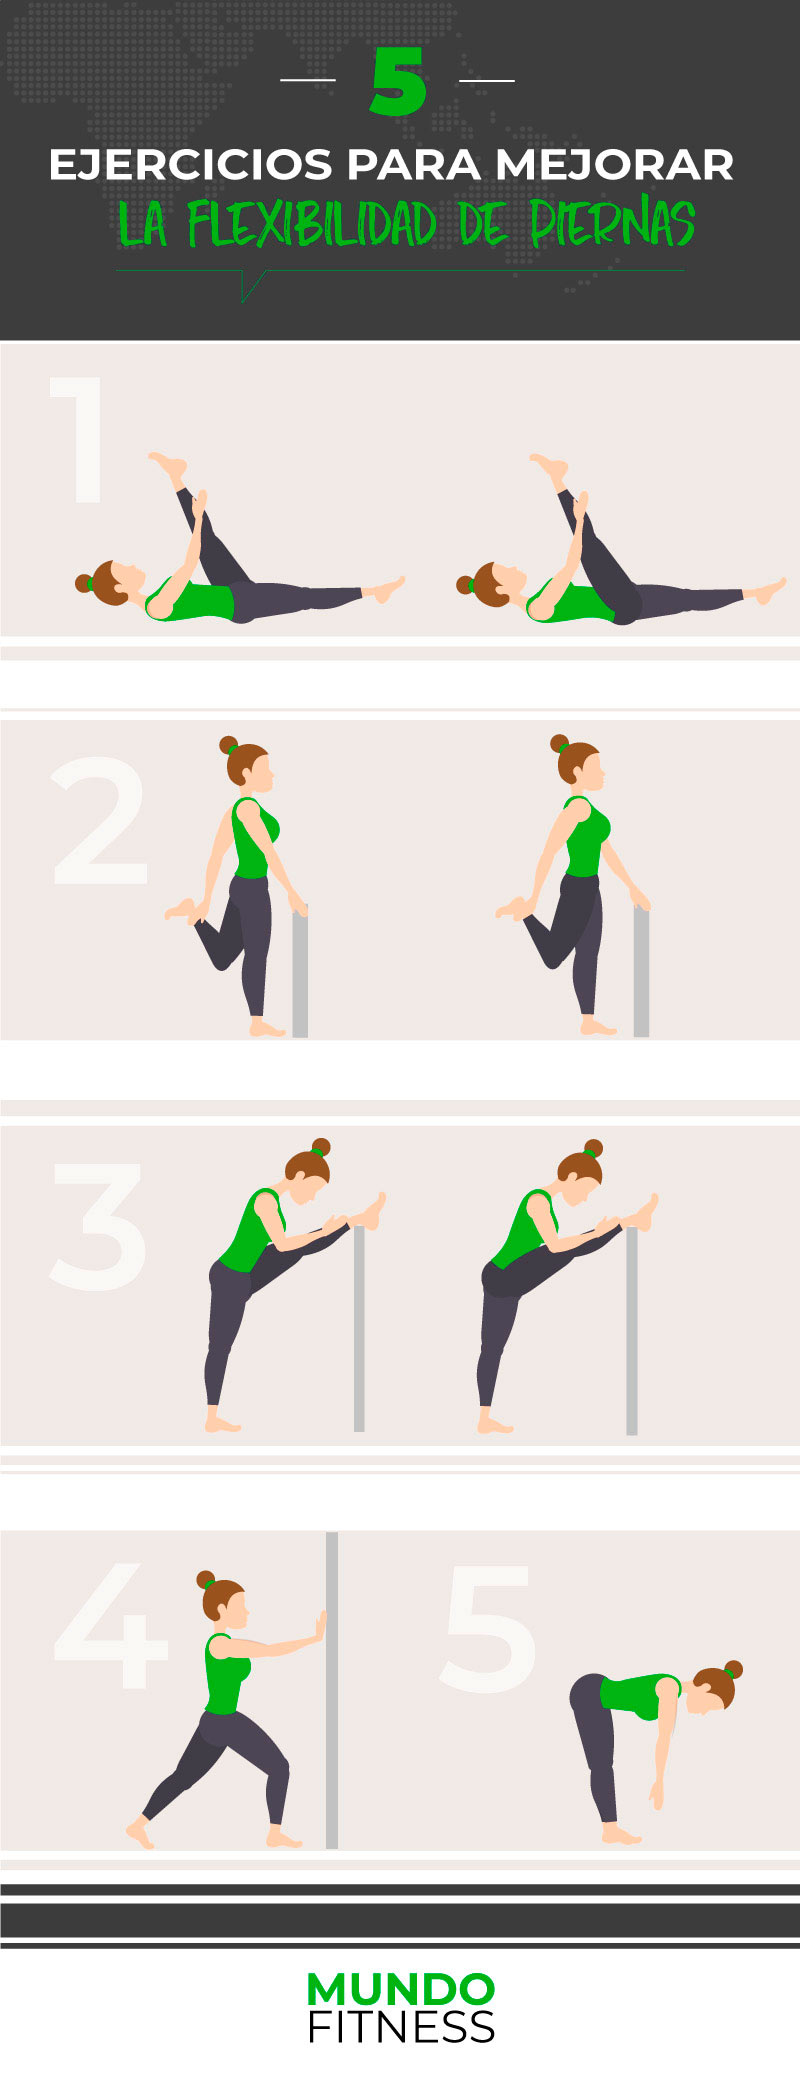 ejercicios-flexibilidad-piernas-infografia